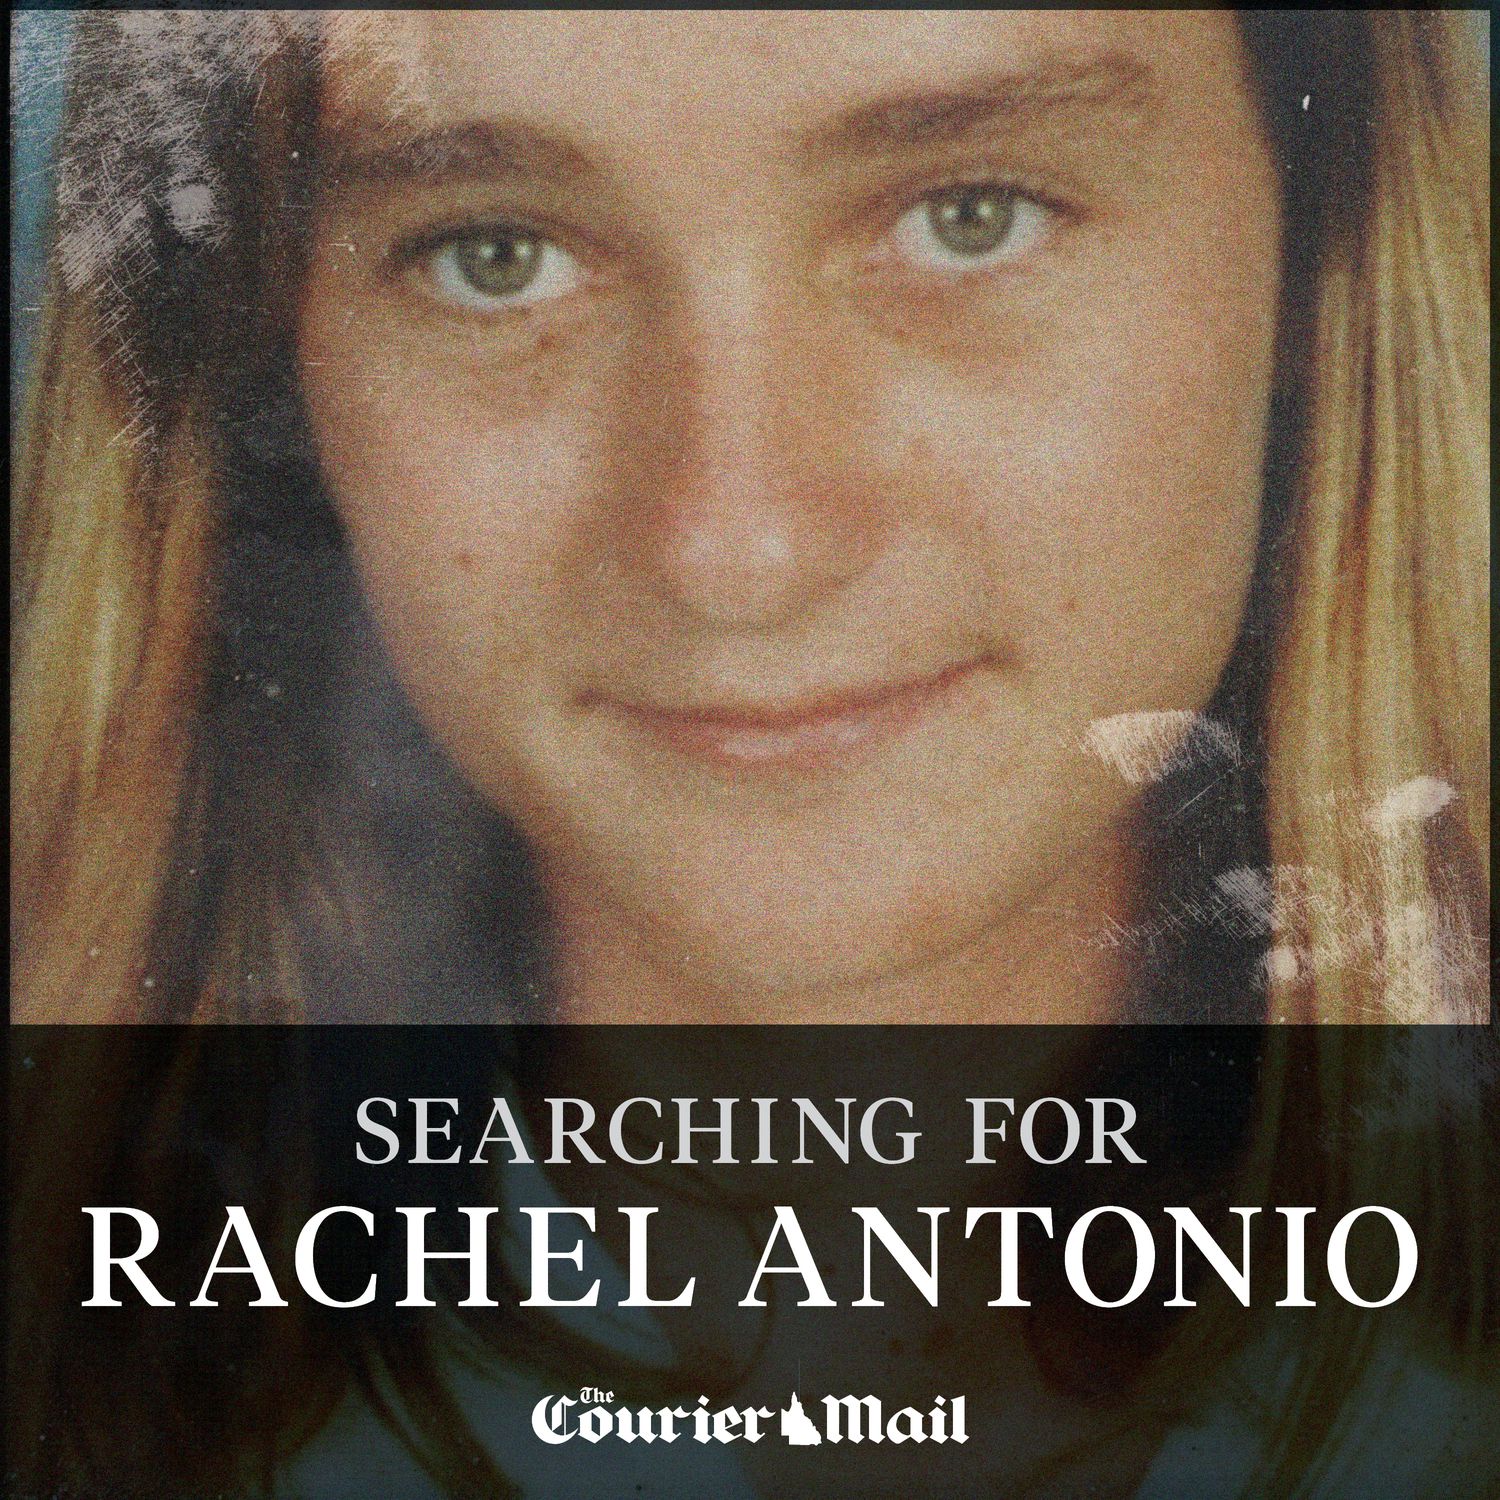 Searching for Rachel Antonio